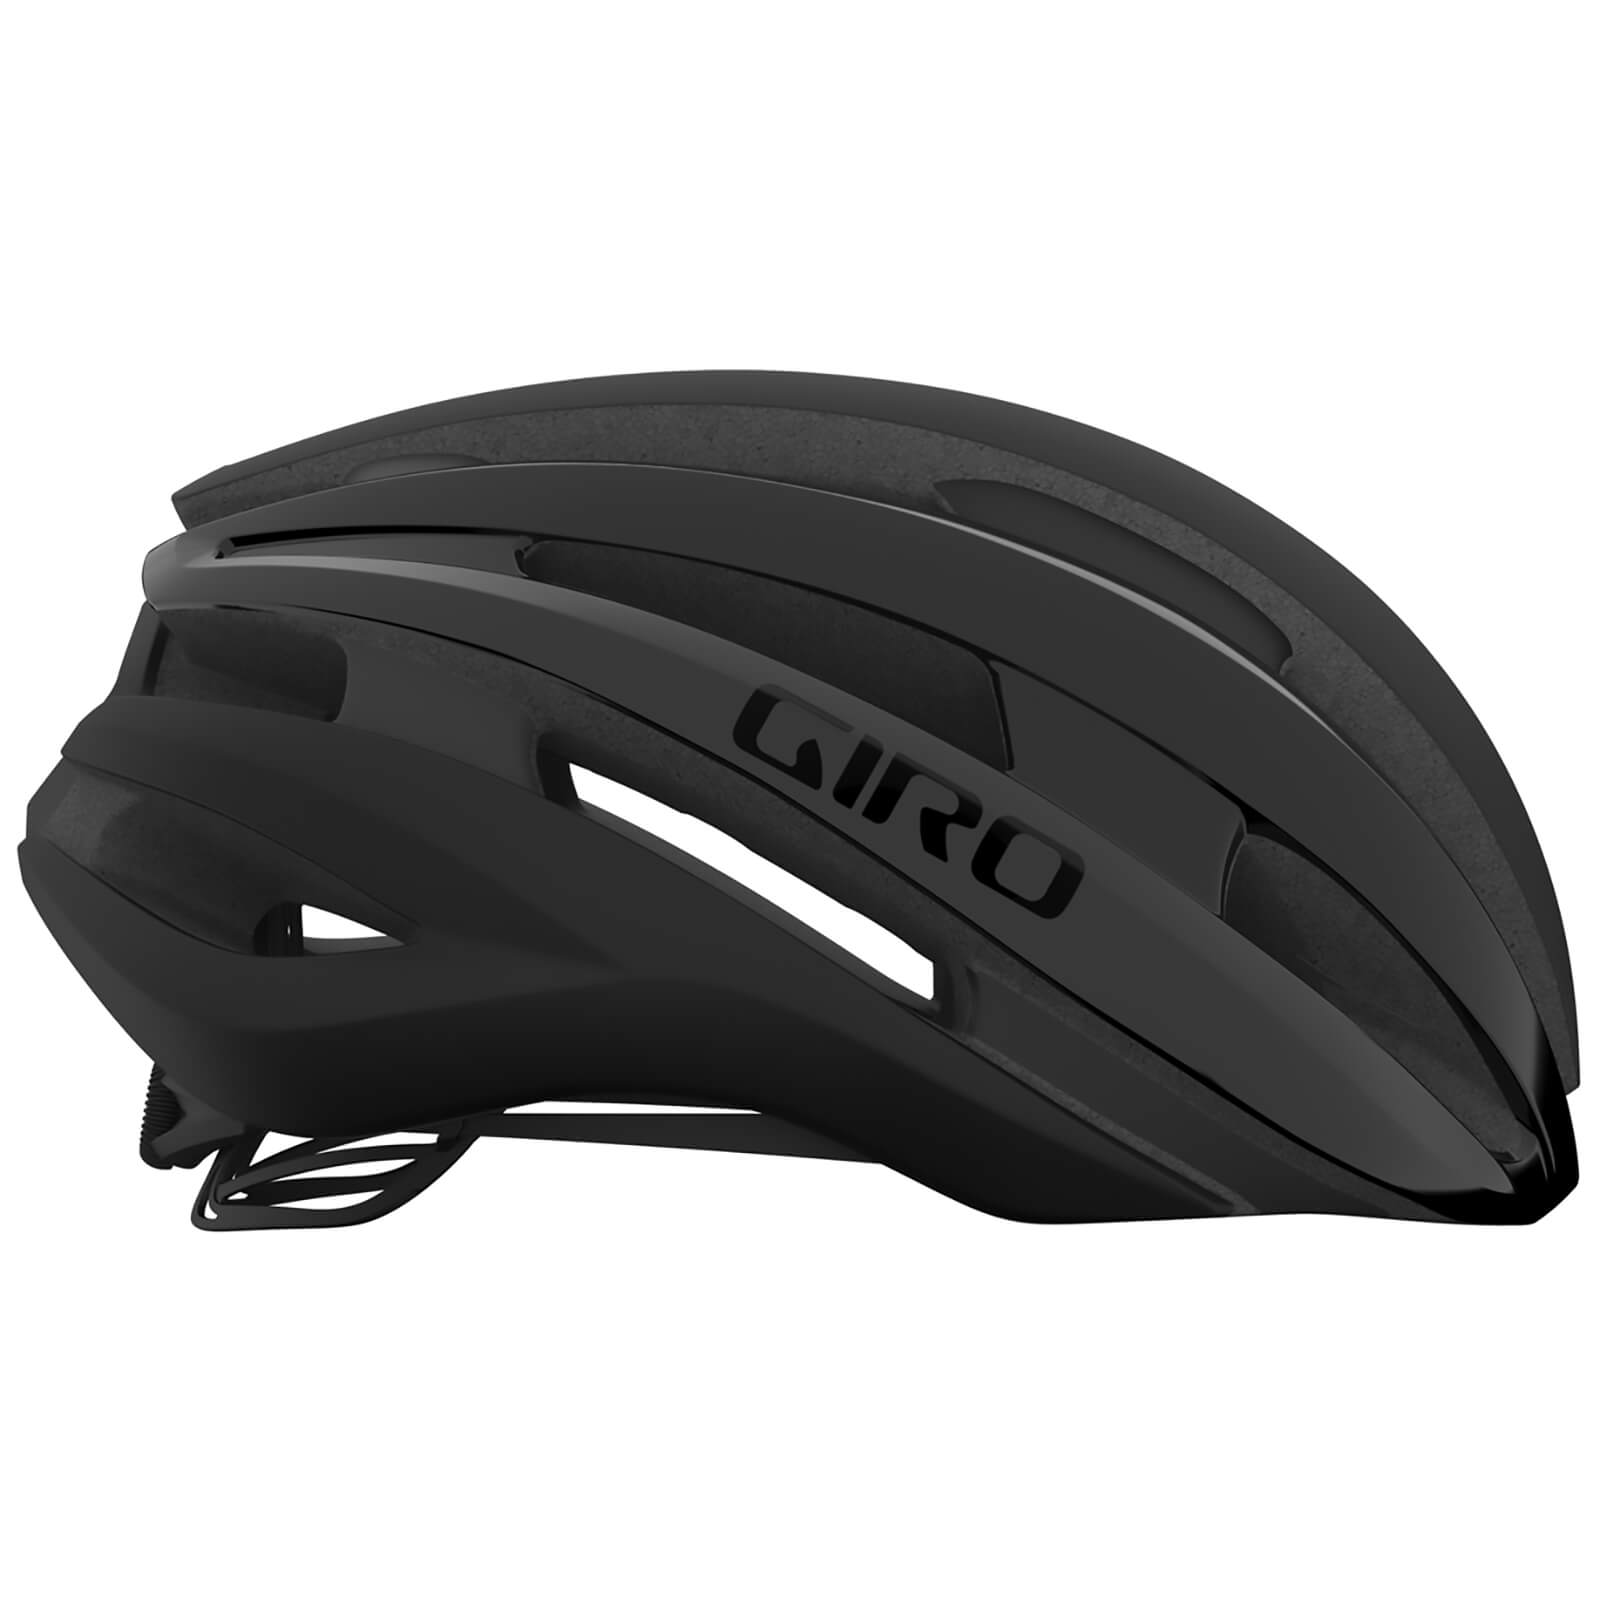 Giro Synthe II MIPS Road Helmet - S/51-55cm - Matte Black/Bright Red